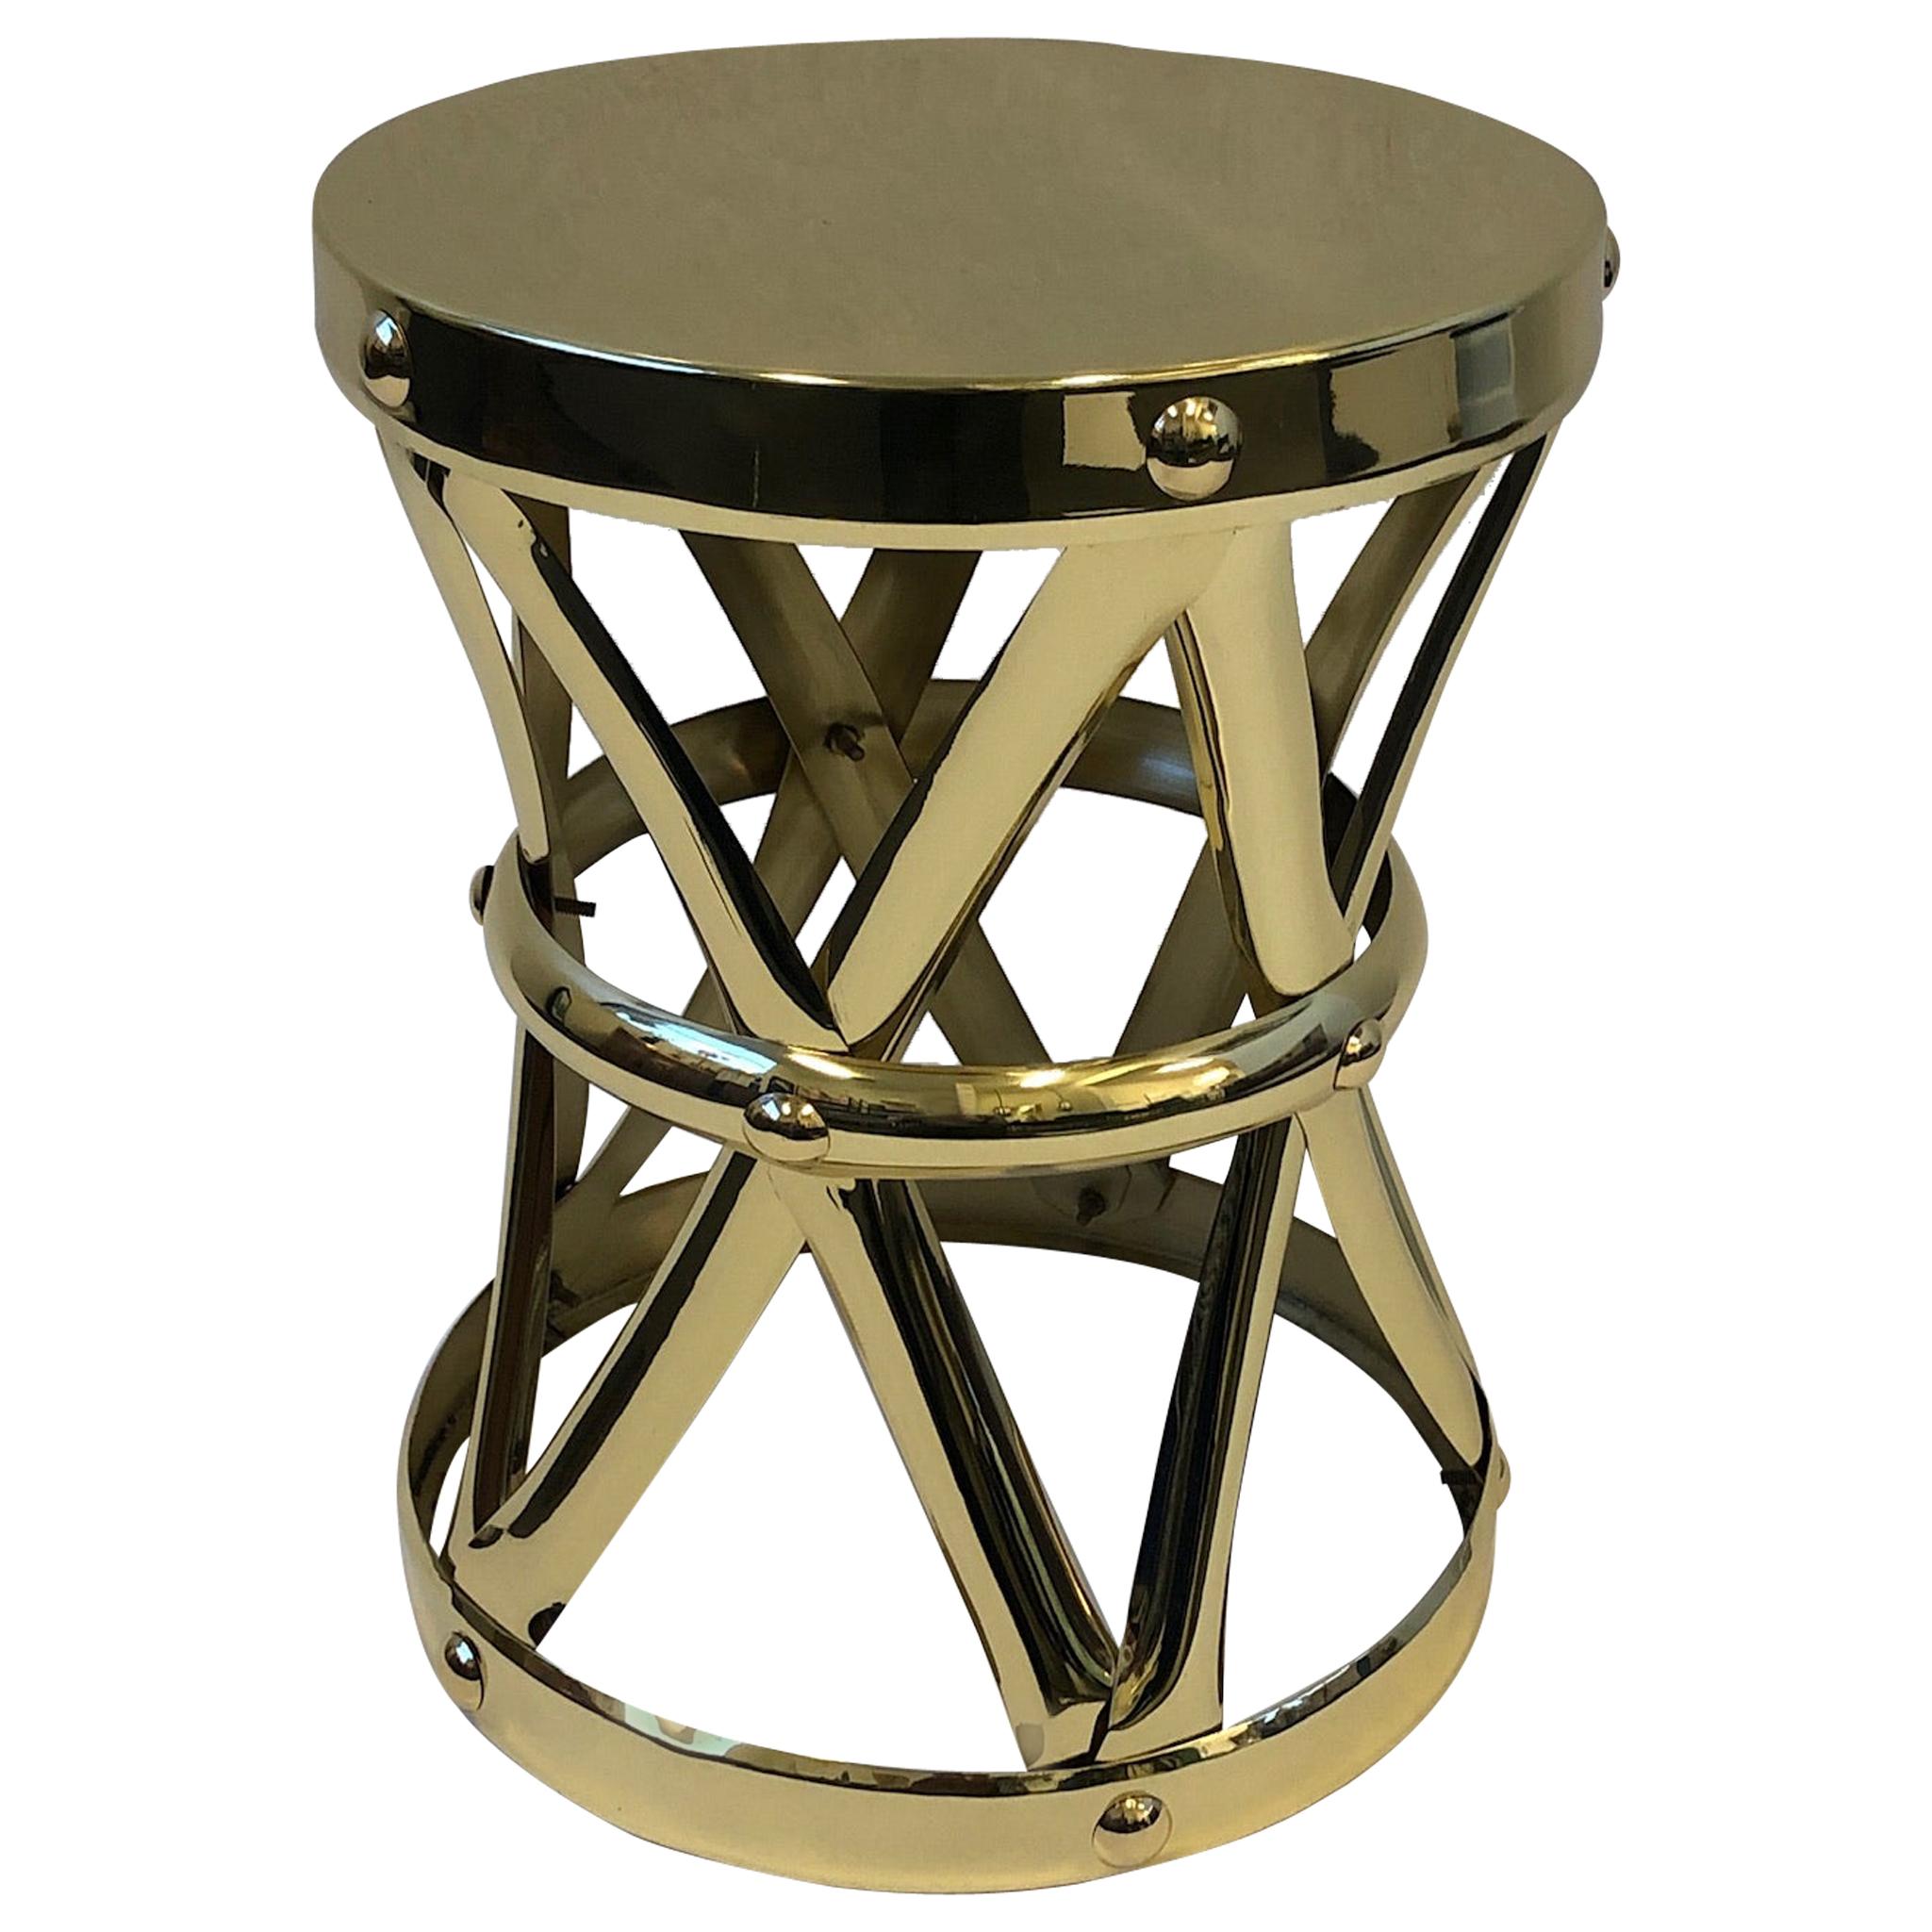 Spanish Brass Drum Occasional Side Table by Sarreid Ltd.